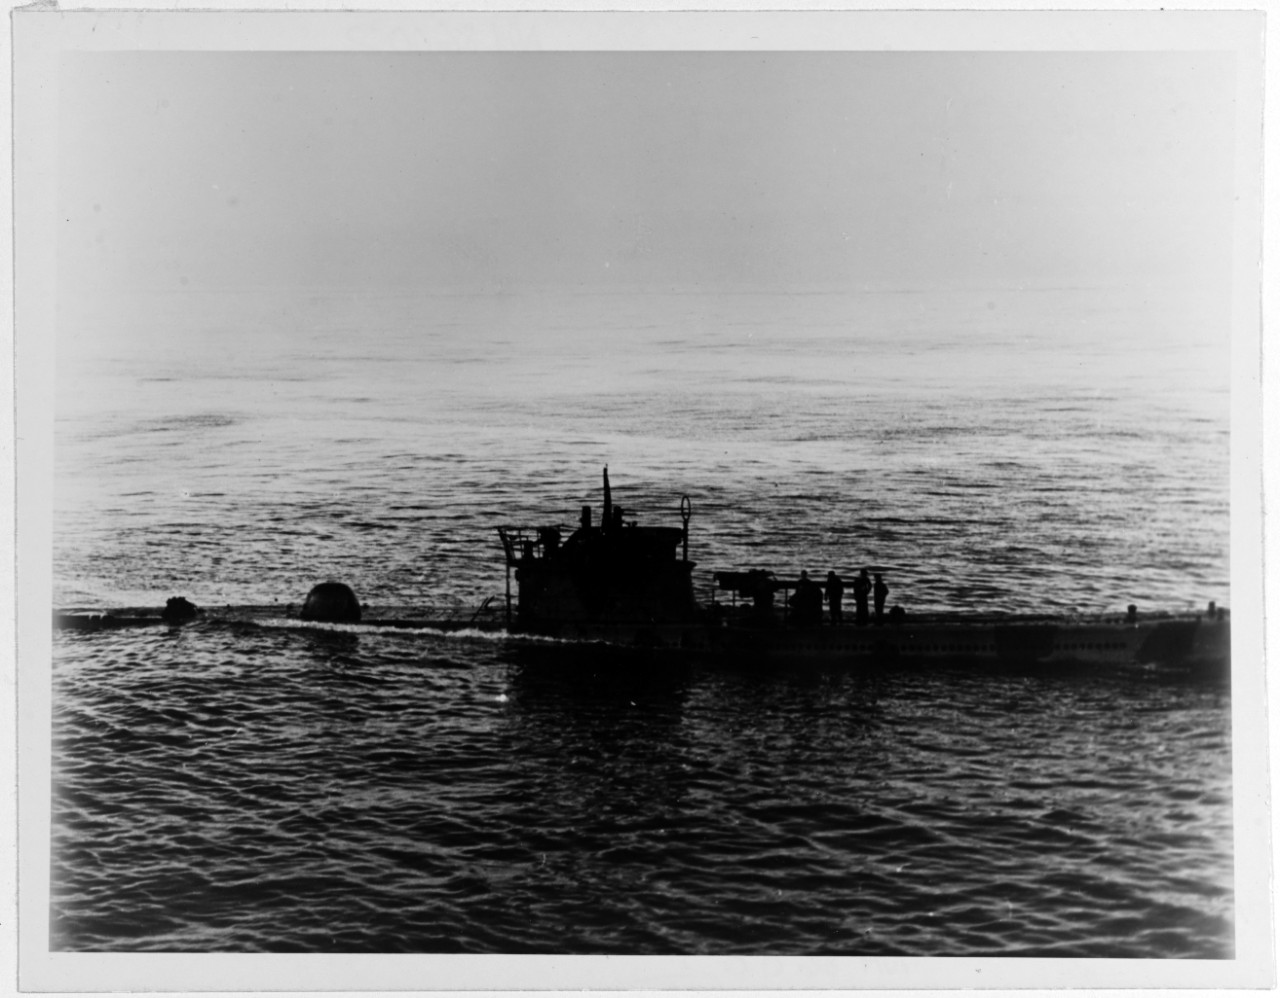 UARSCIEK (Italian submarine, 1937-1942)